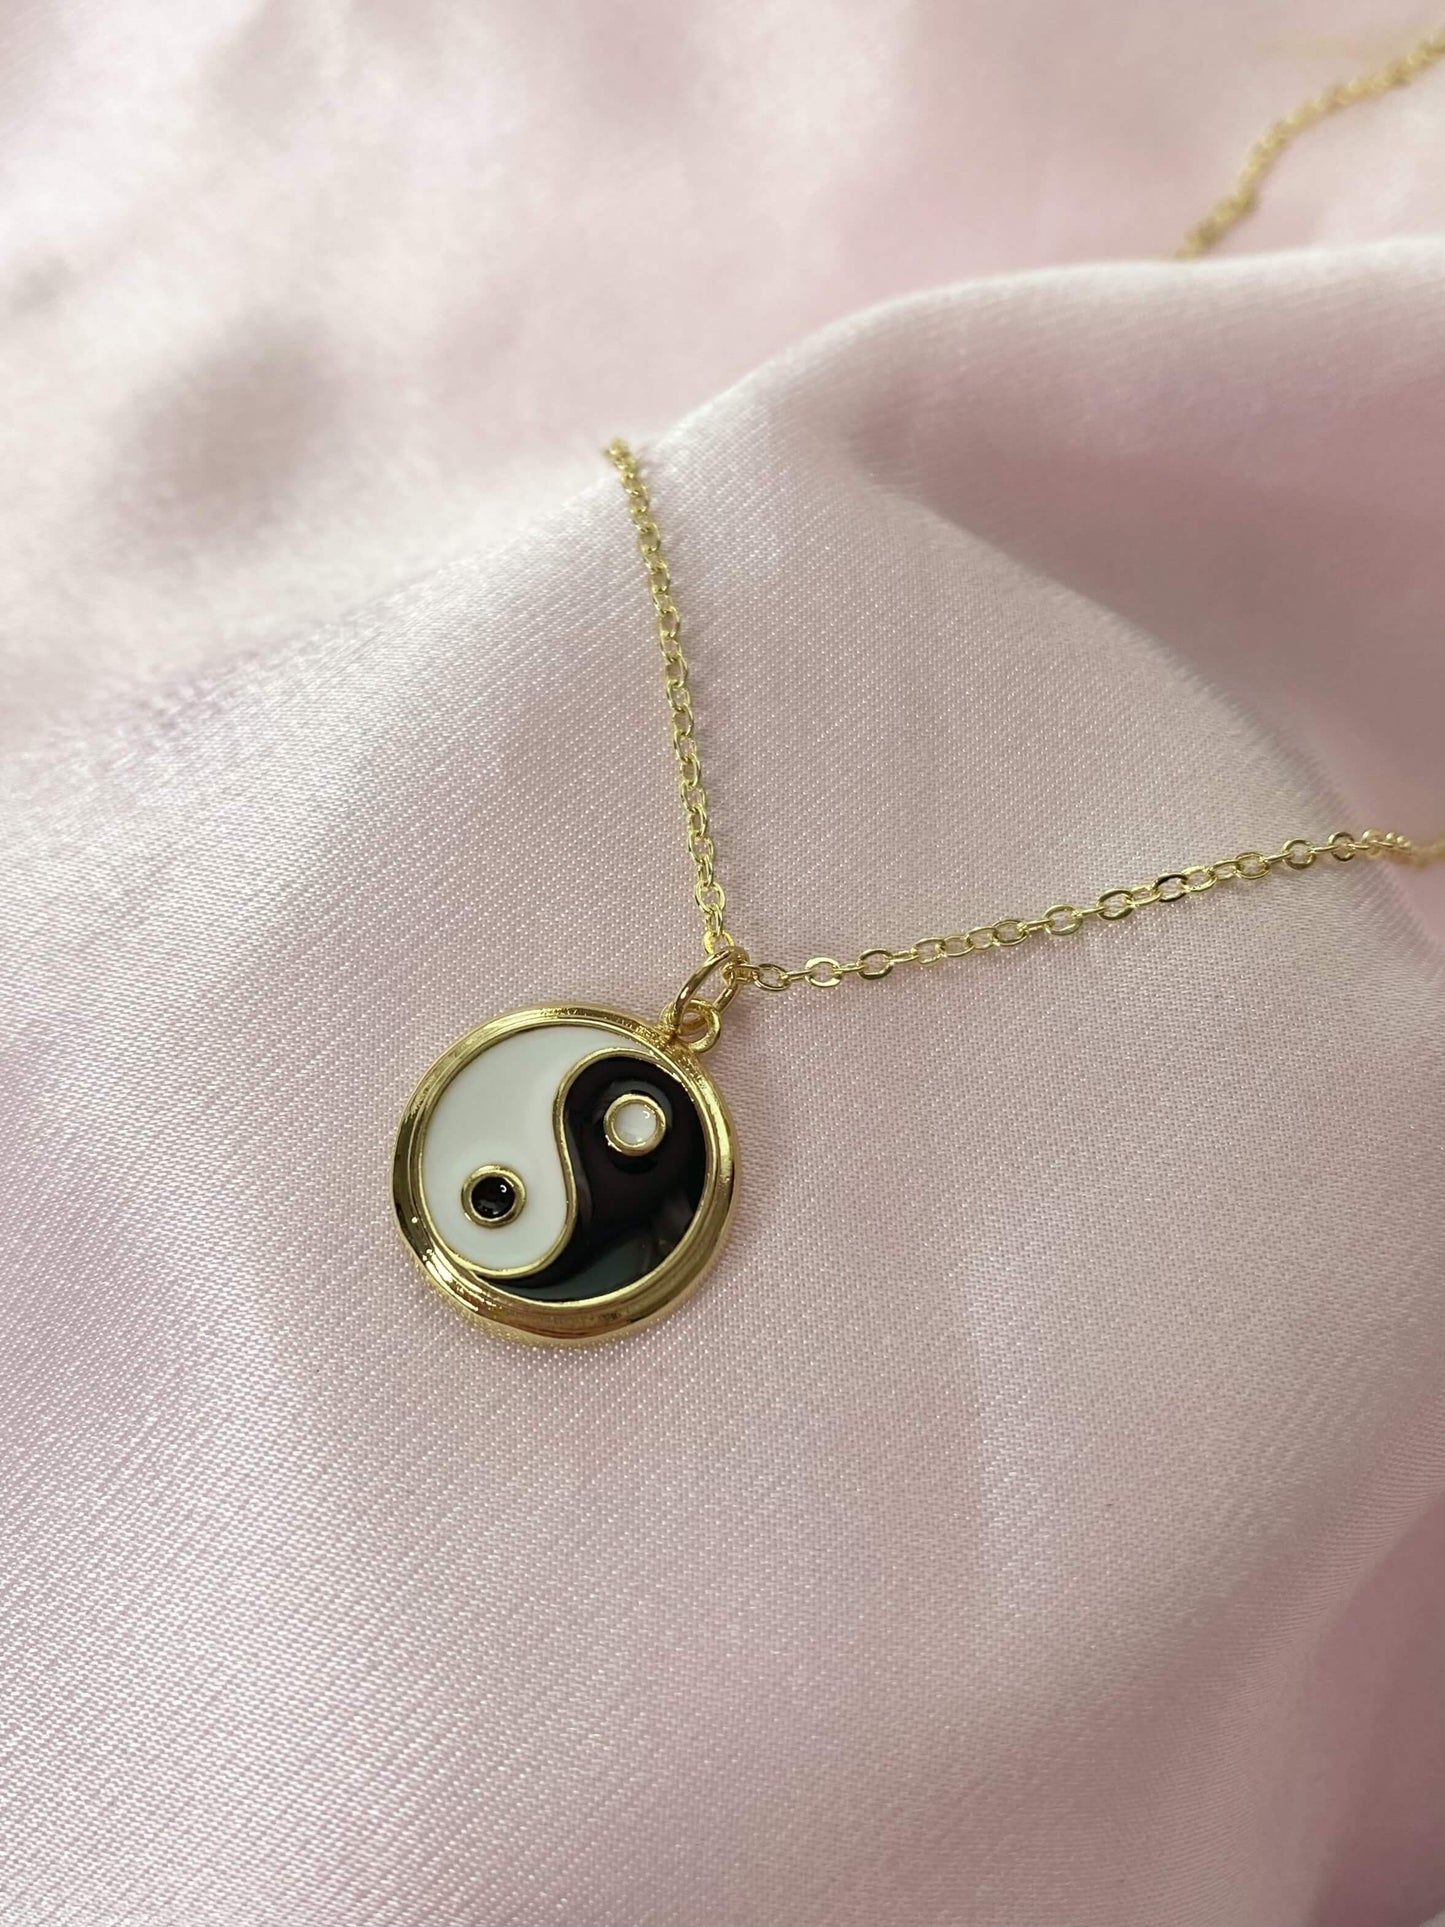 Yin Yang Necklace (14k gold) - Luna Alaska Jewelry